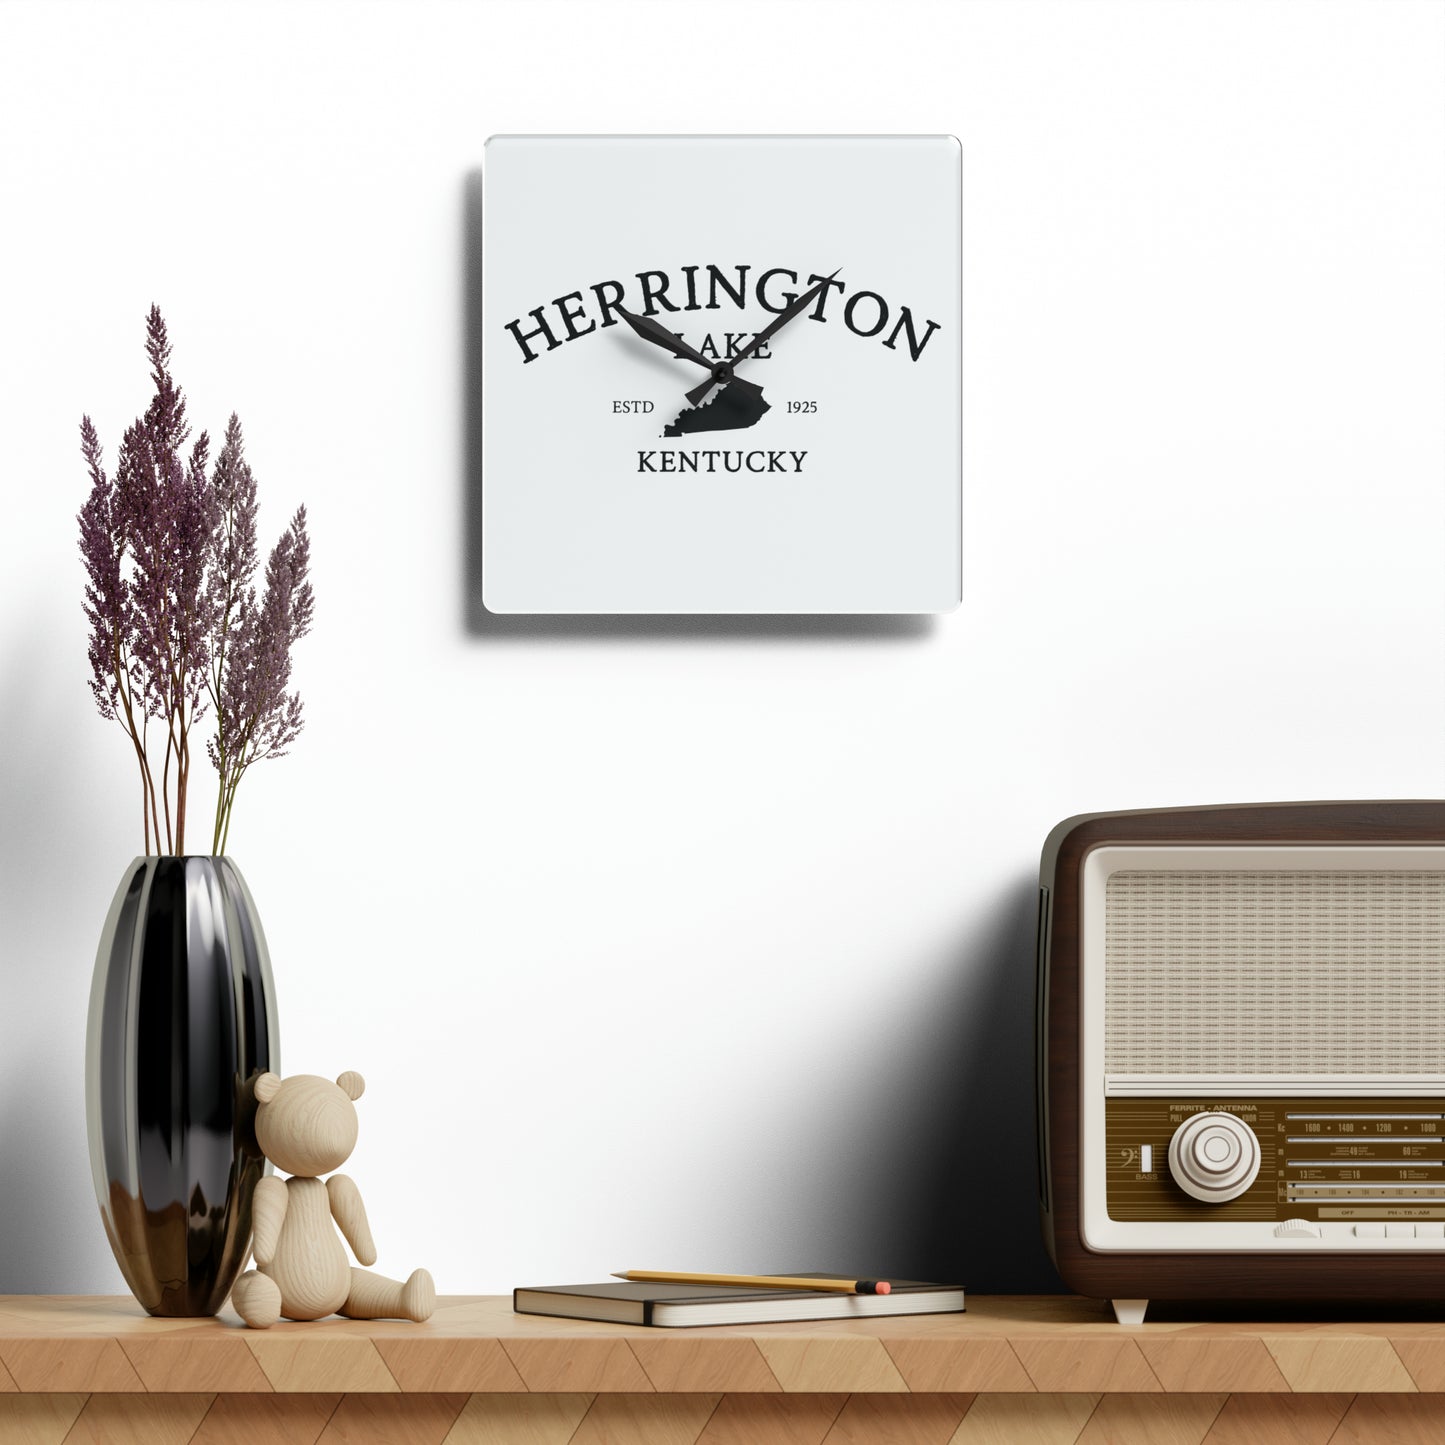 Simply Herrington Acrylic Wall Clock, Round & Square, White